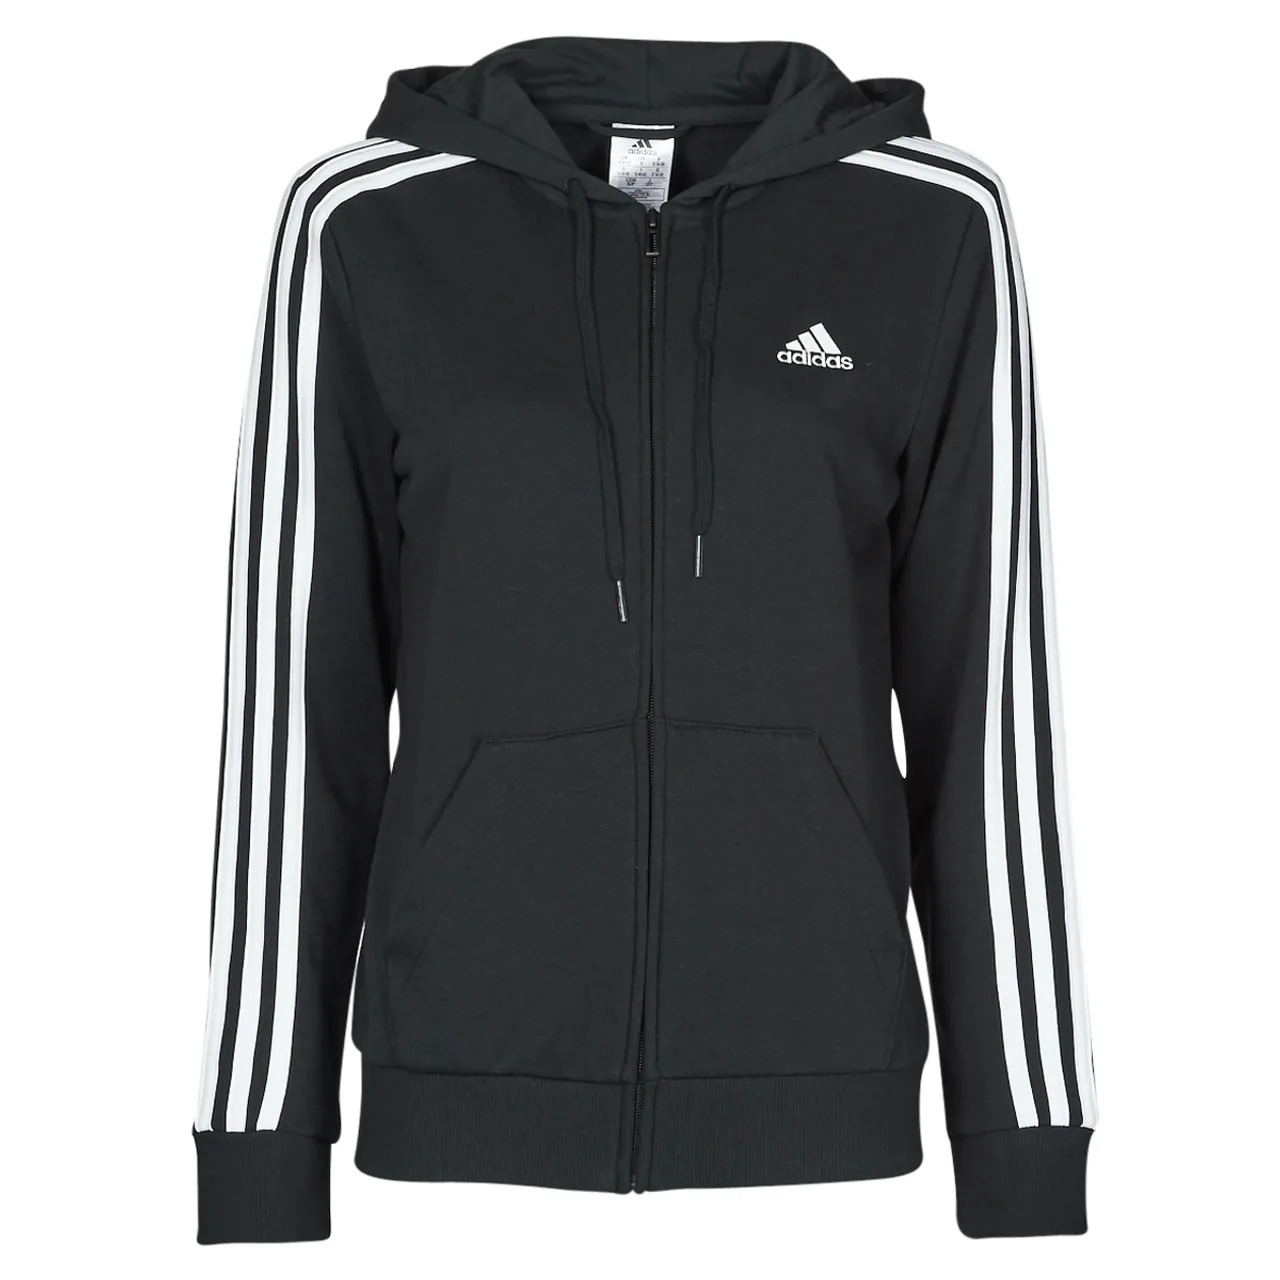 adidas  W 3S FT FZ HD  women's Tracksuit jacket in Black